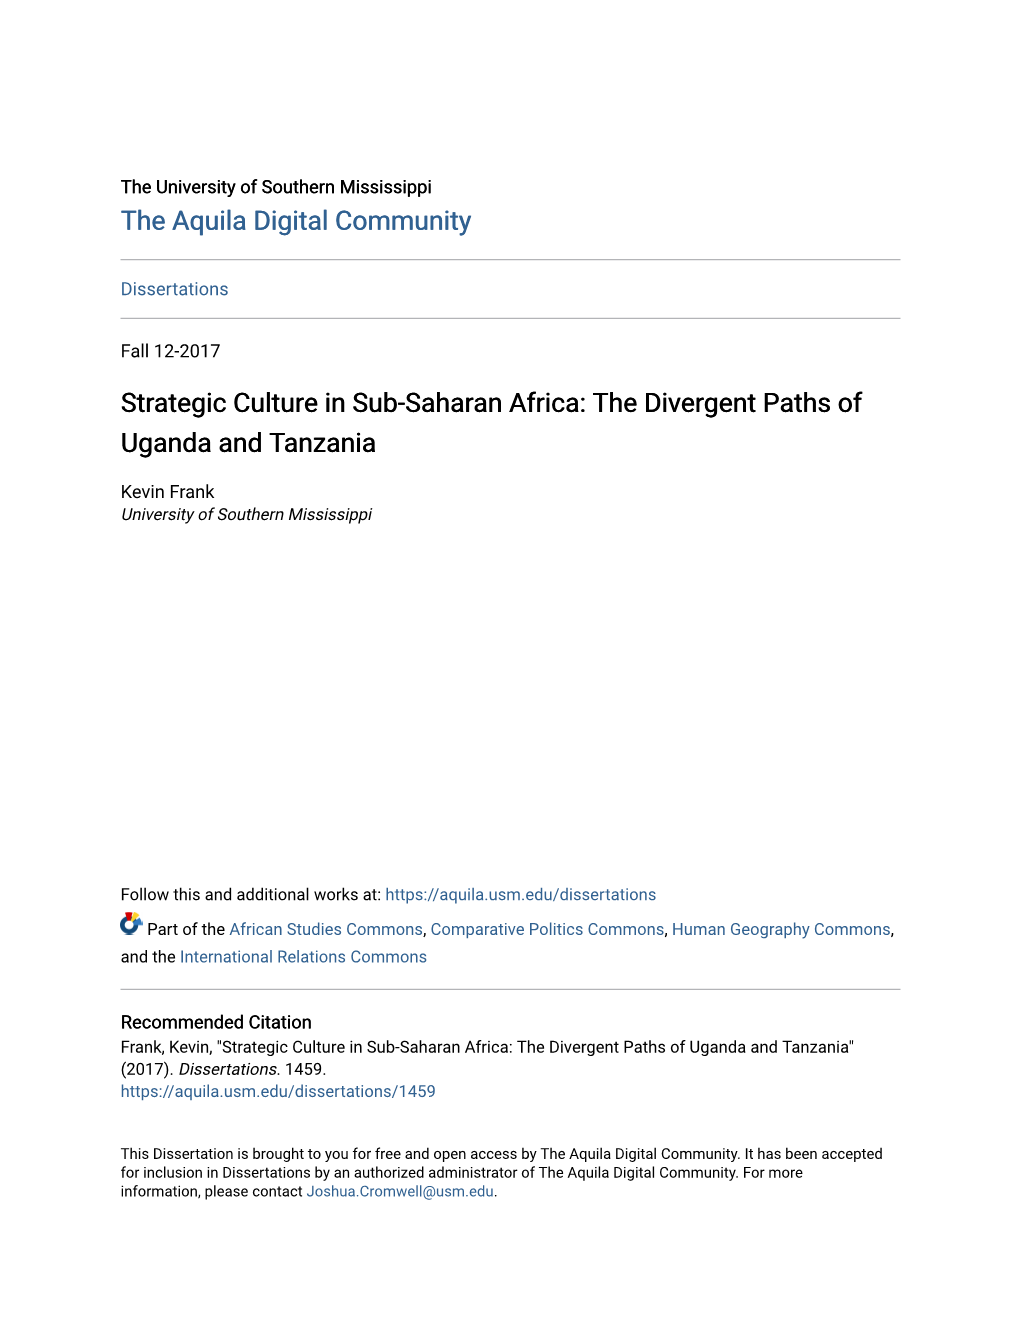 Strategic Culture in Sub-Saharan Africa: the Divergent Paths of Uganda and Tanzania